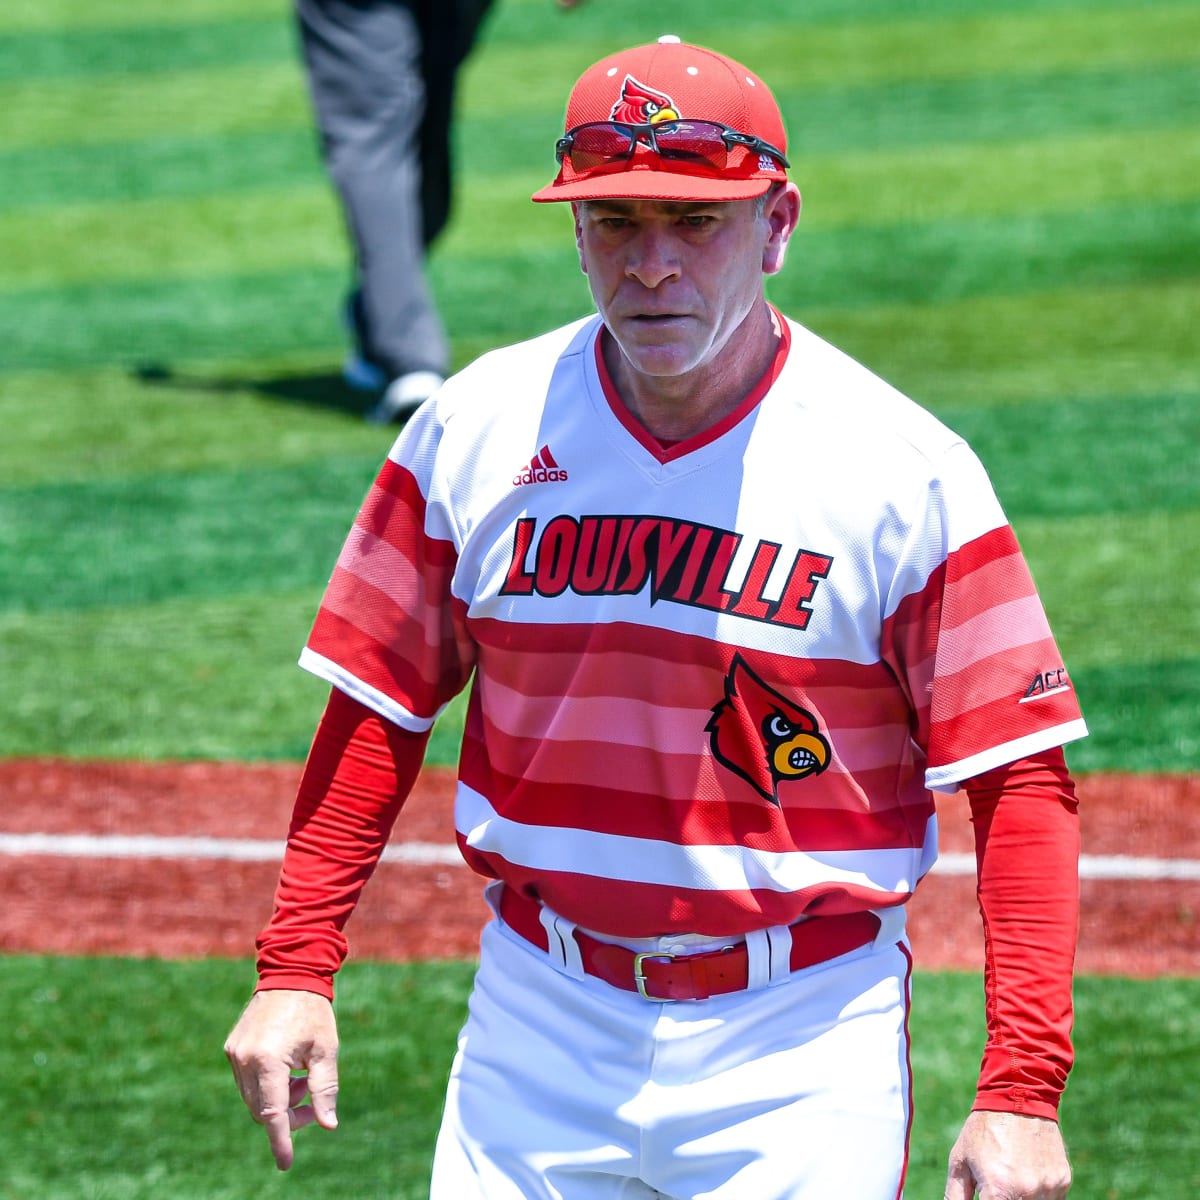 Louisville baseball's Dan McDonnell keeps an even keel